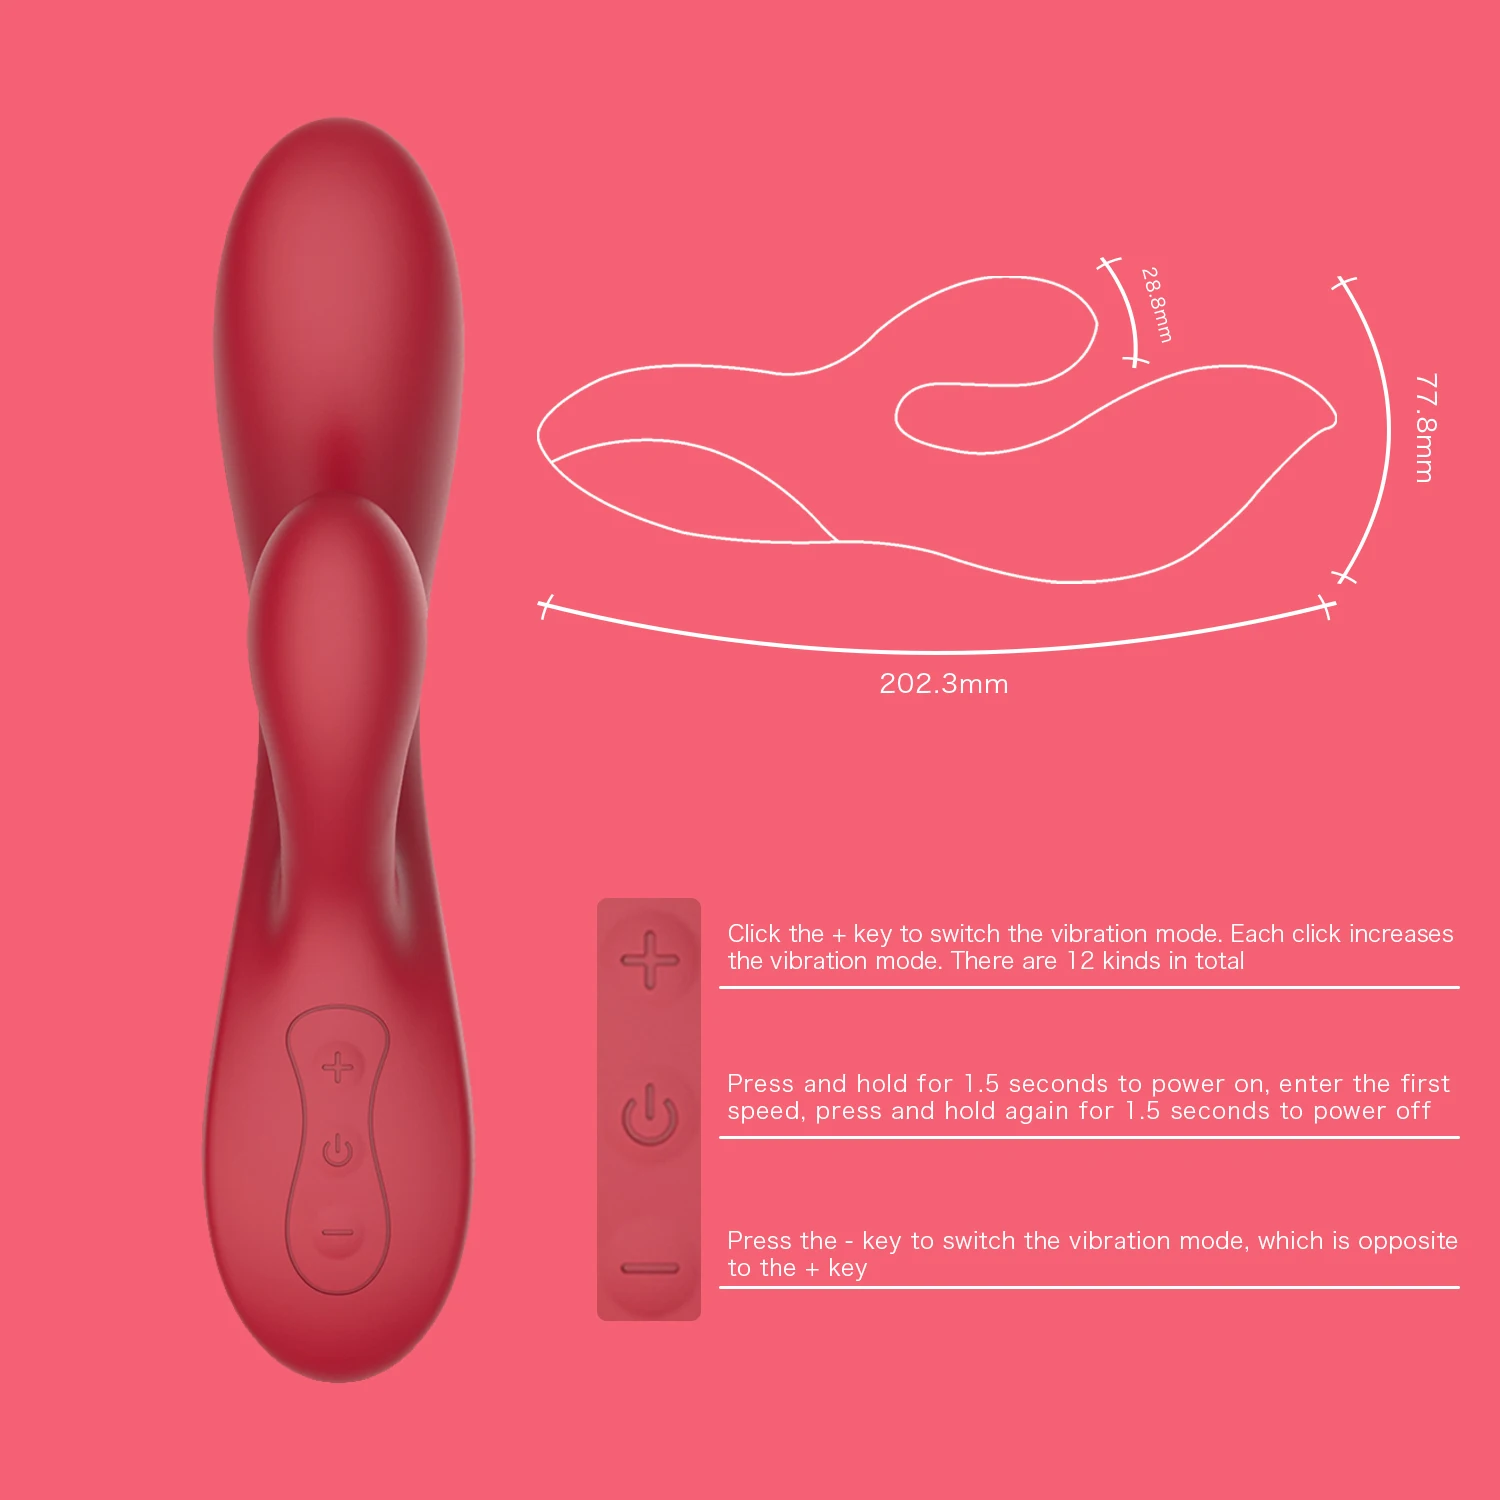 Sex Sexy Toys Shop Vibrador Par Muj Calient Adult Clitoris Vibrators Vagina  Penis Dildo Vibrator For Woman Adult Products - Buy Funny Sex Toys,Vibrador,Vibrator  For Clitoris G Point Product on 